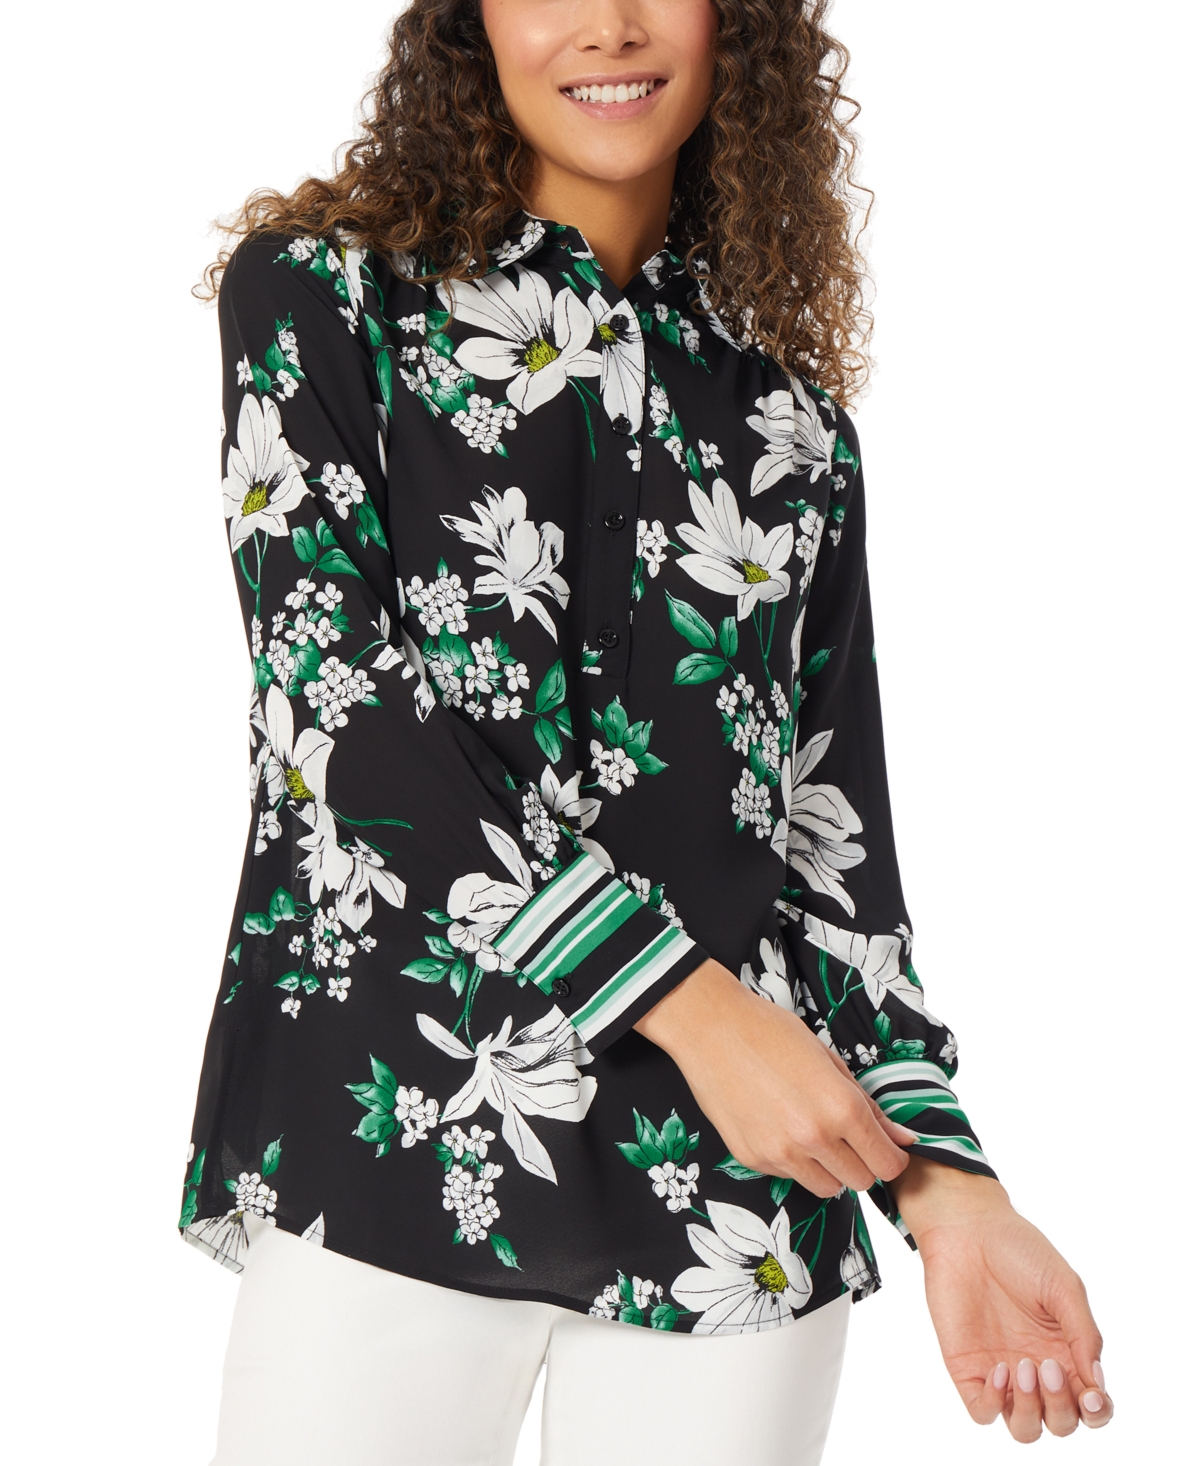 Women's Long-Sleeve Floral-Print Tunic Blouse - Jones Black/Kelly Green